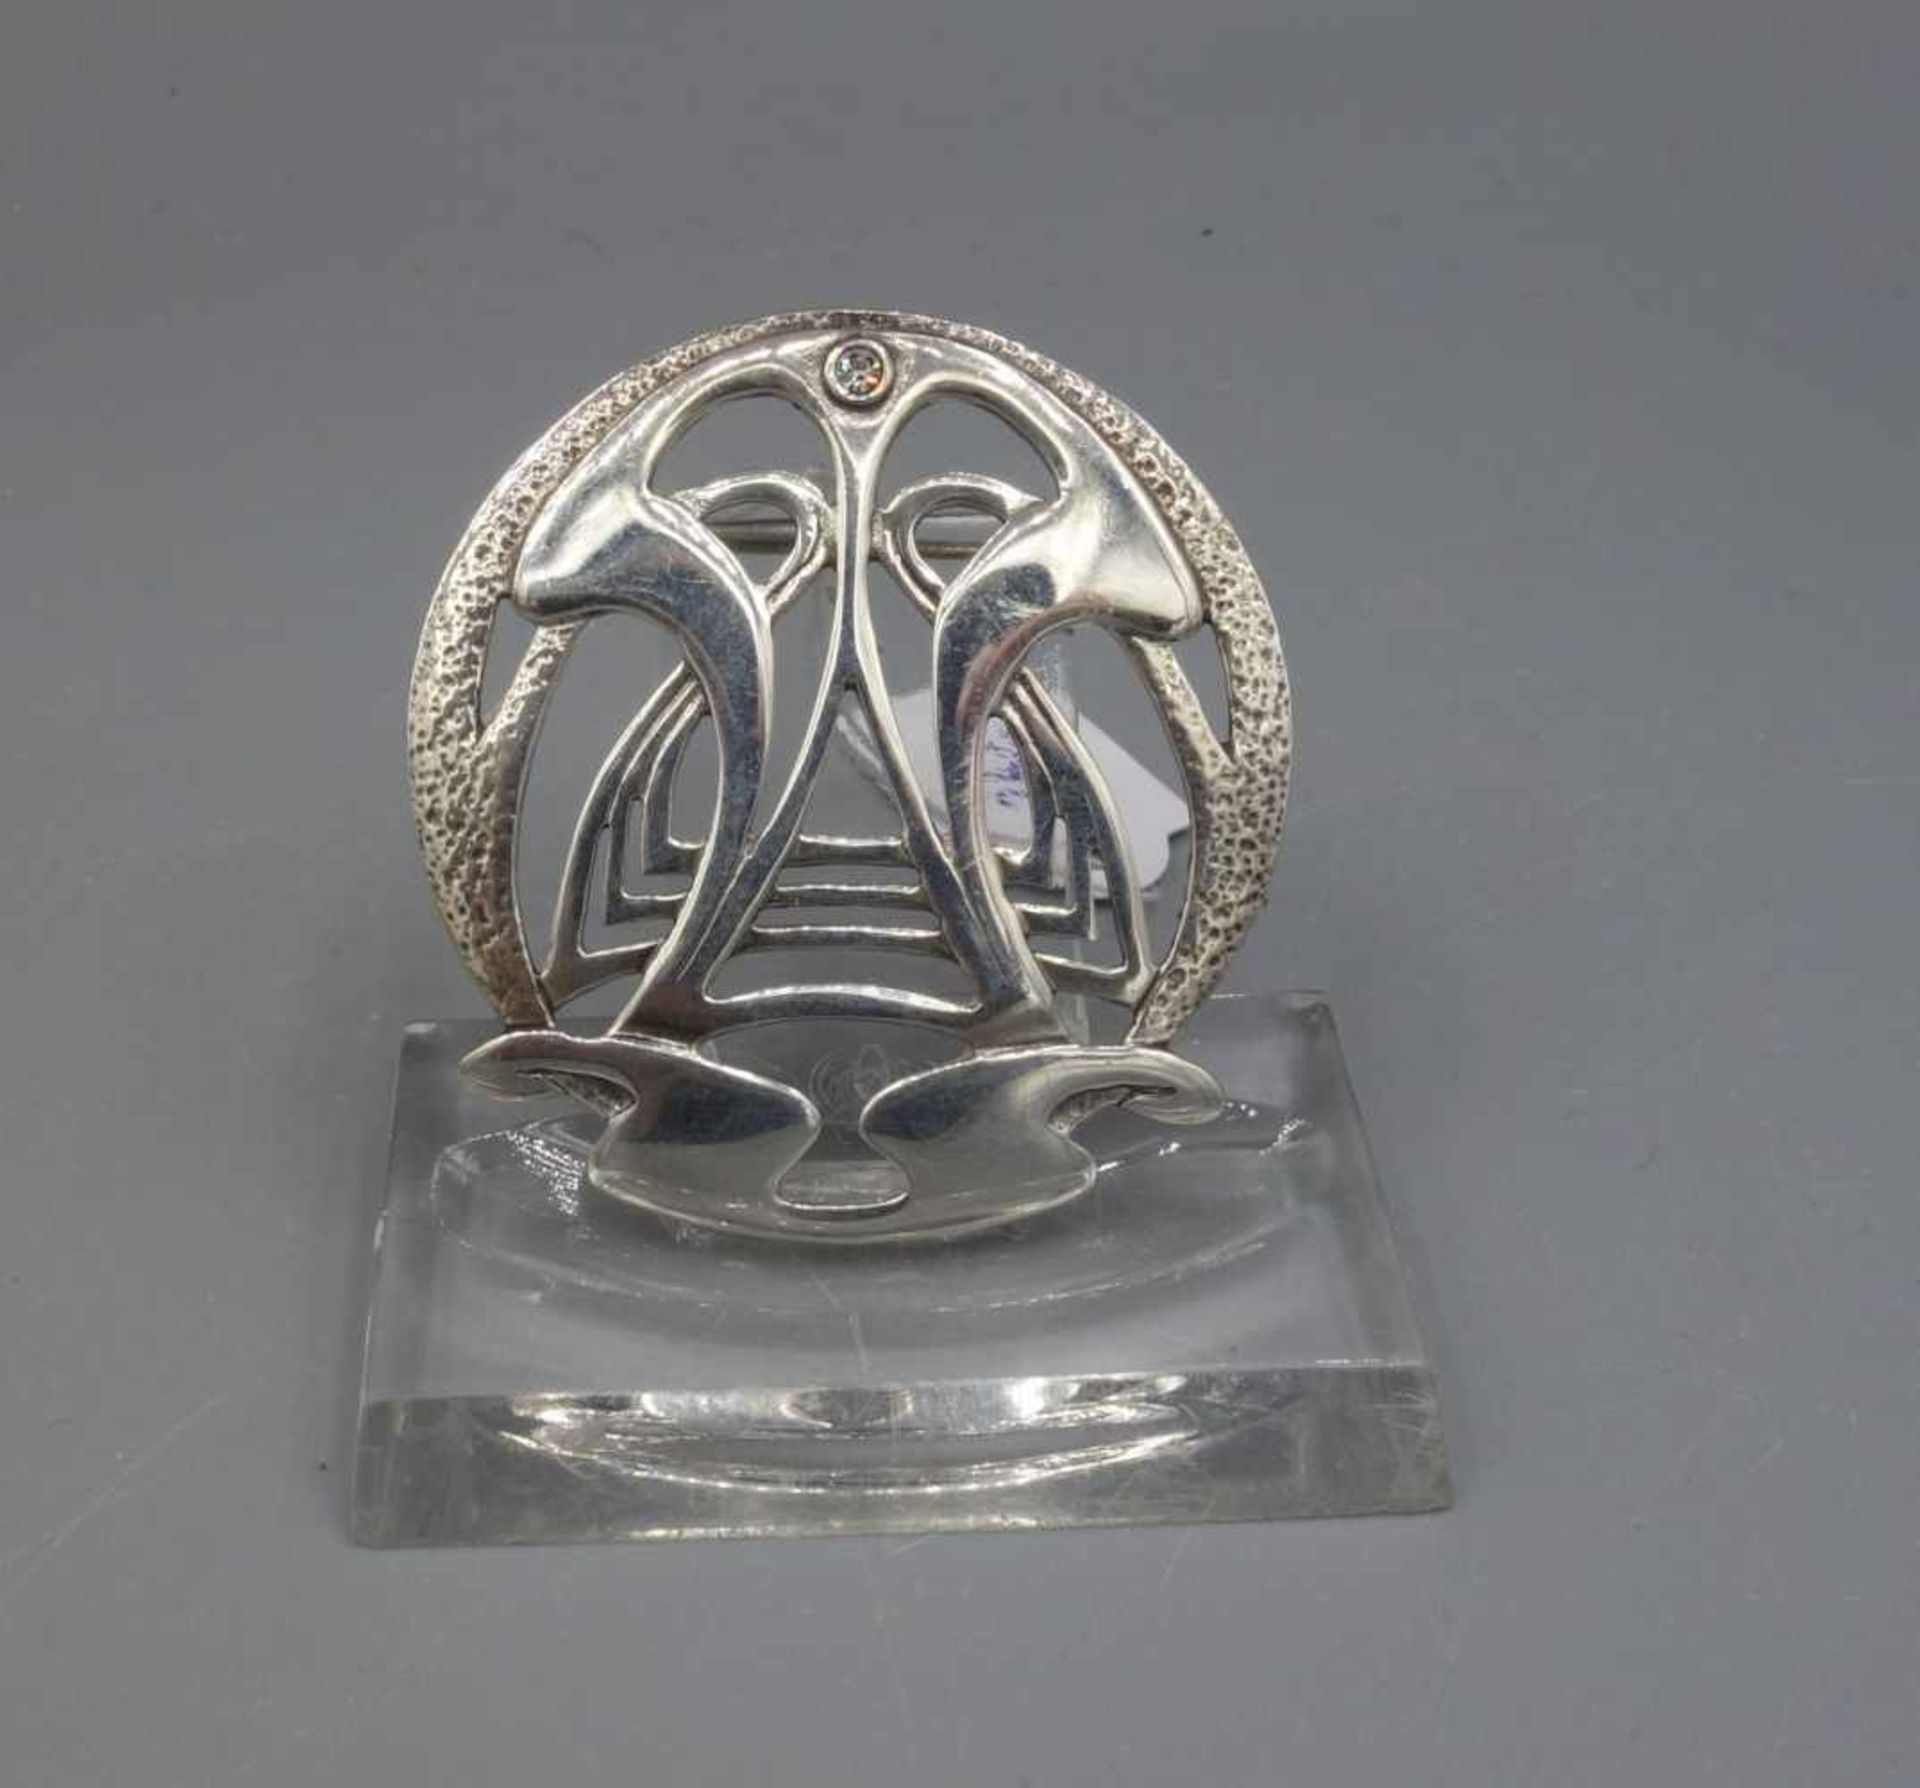 ART DÉCO - ANHÄNGER / BROSCHE / Art déco pendant / brooch, 925er Silber (12,7 g), besetzt mit